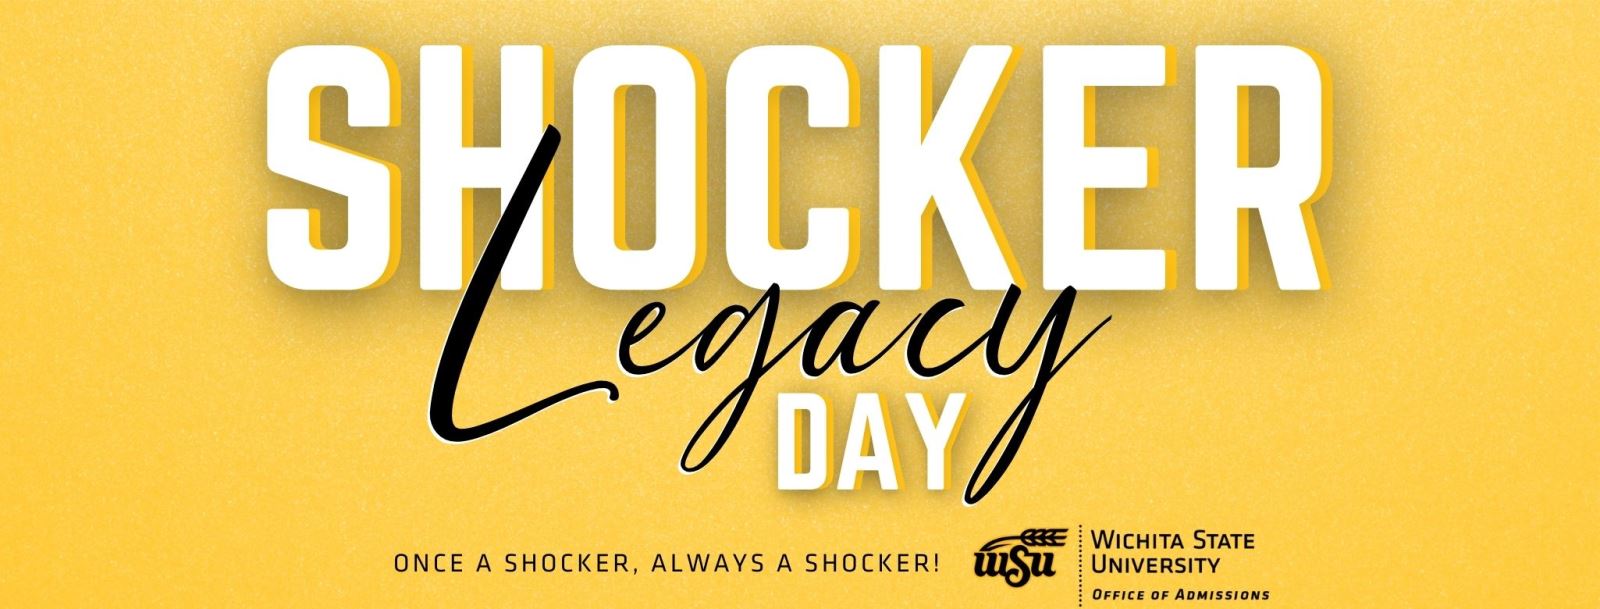 Shocker Legacy Day